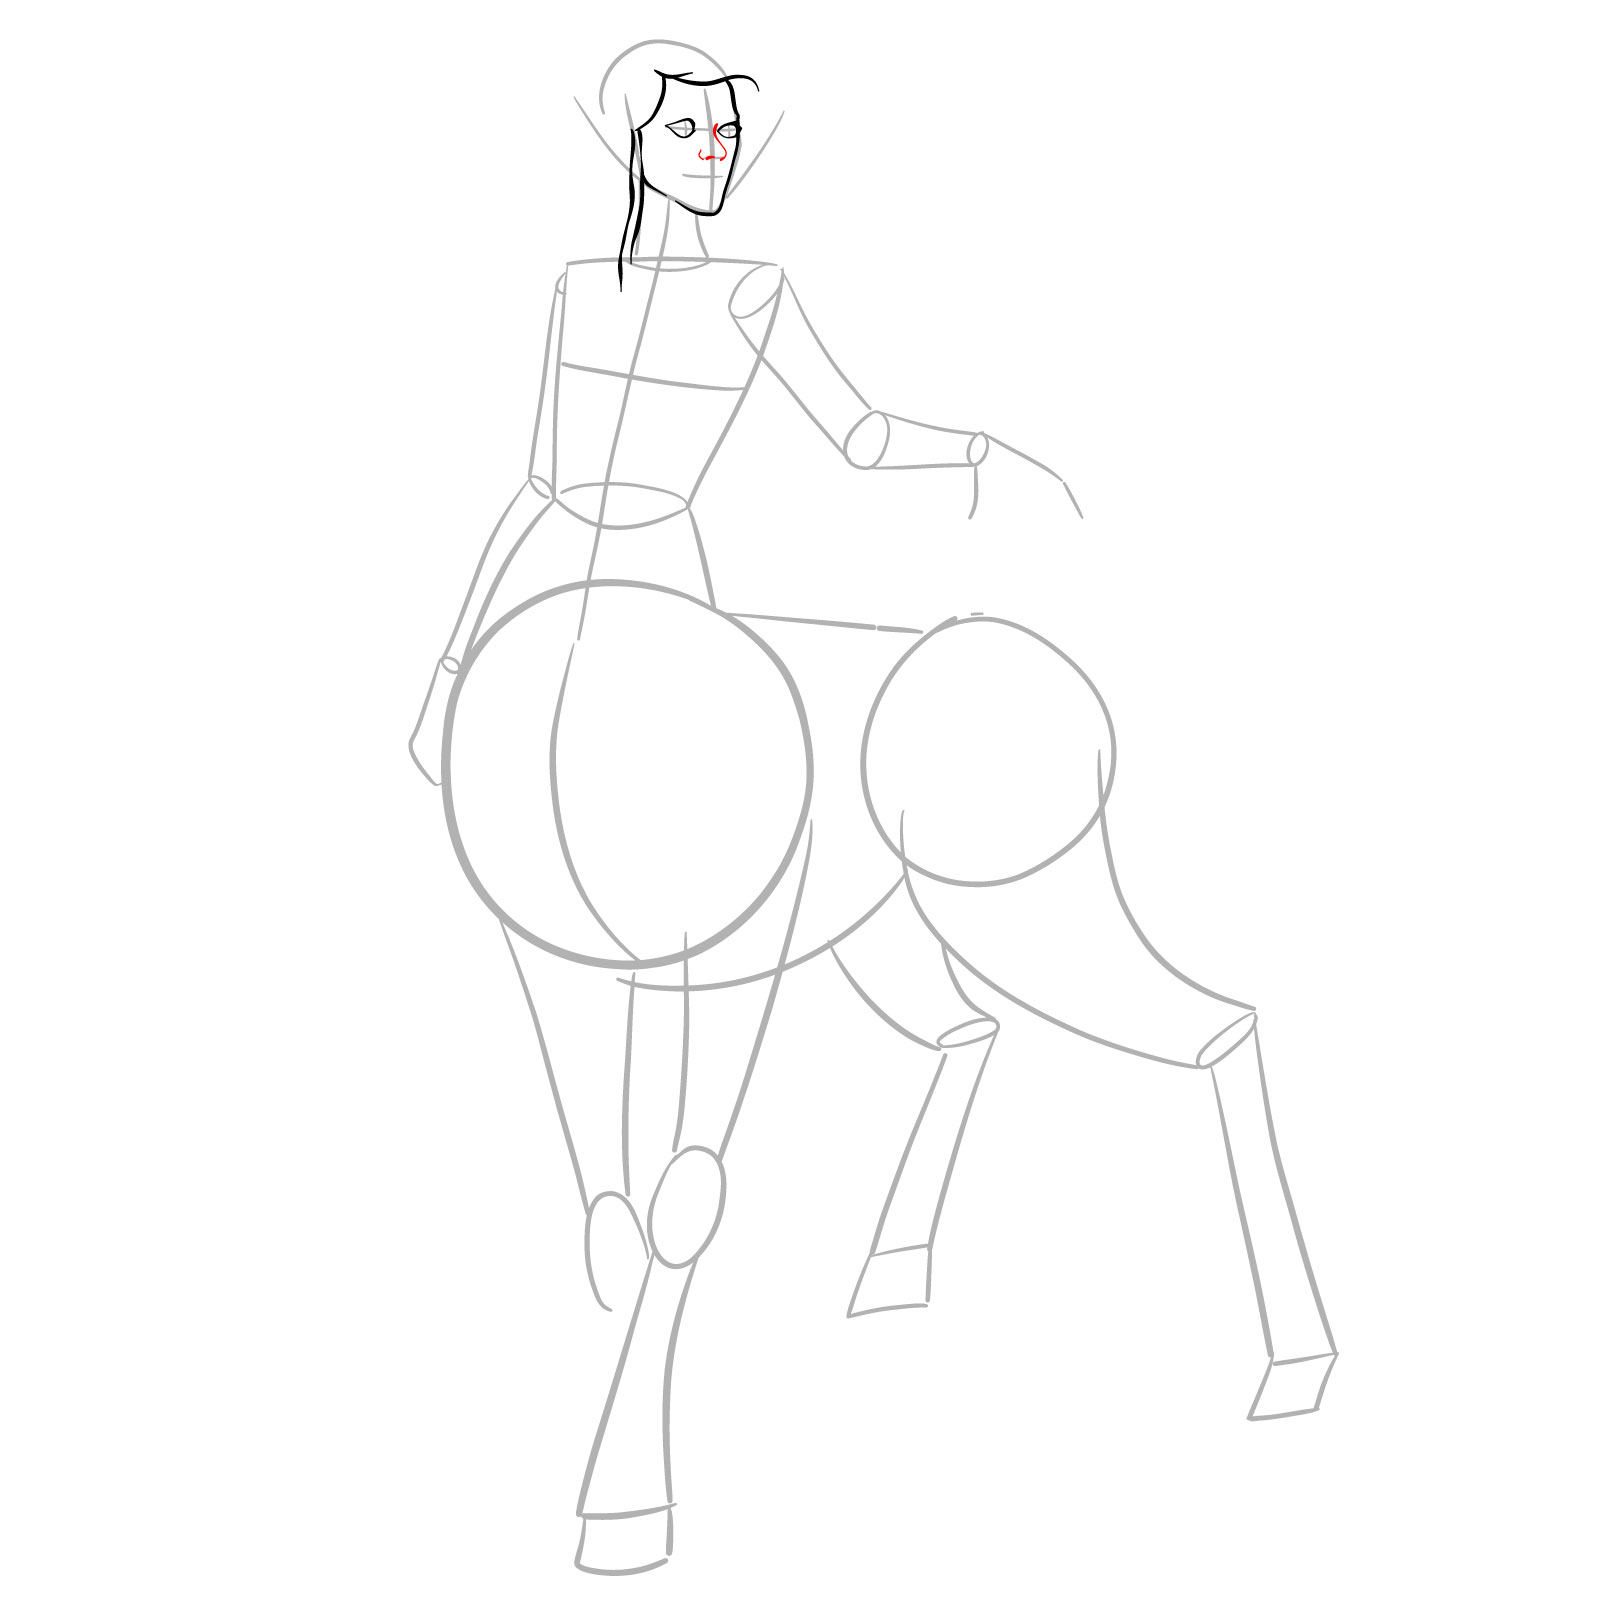 How to draw a Female Centaur - step 08